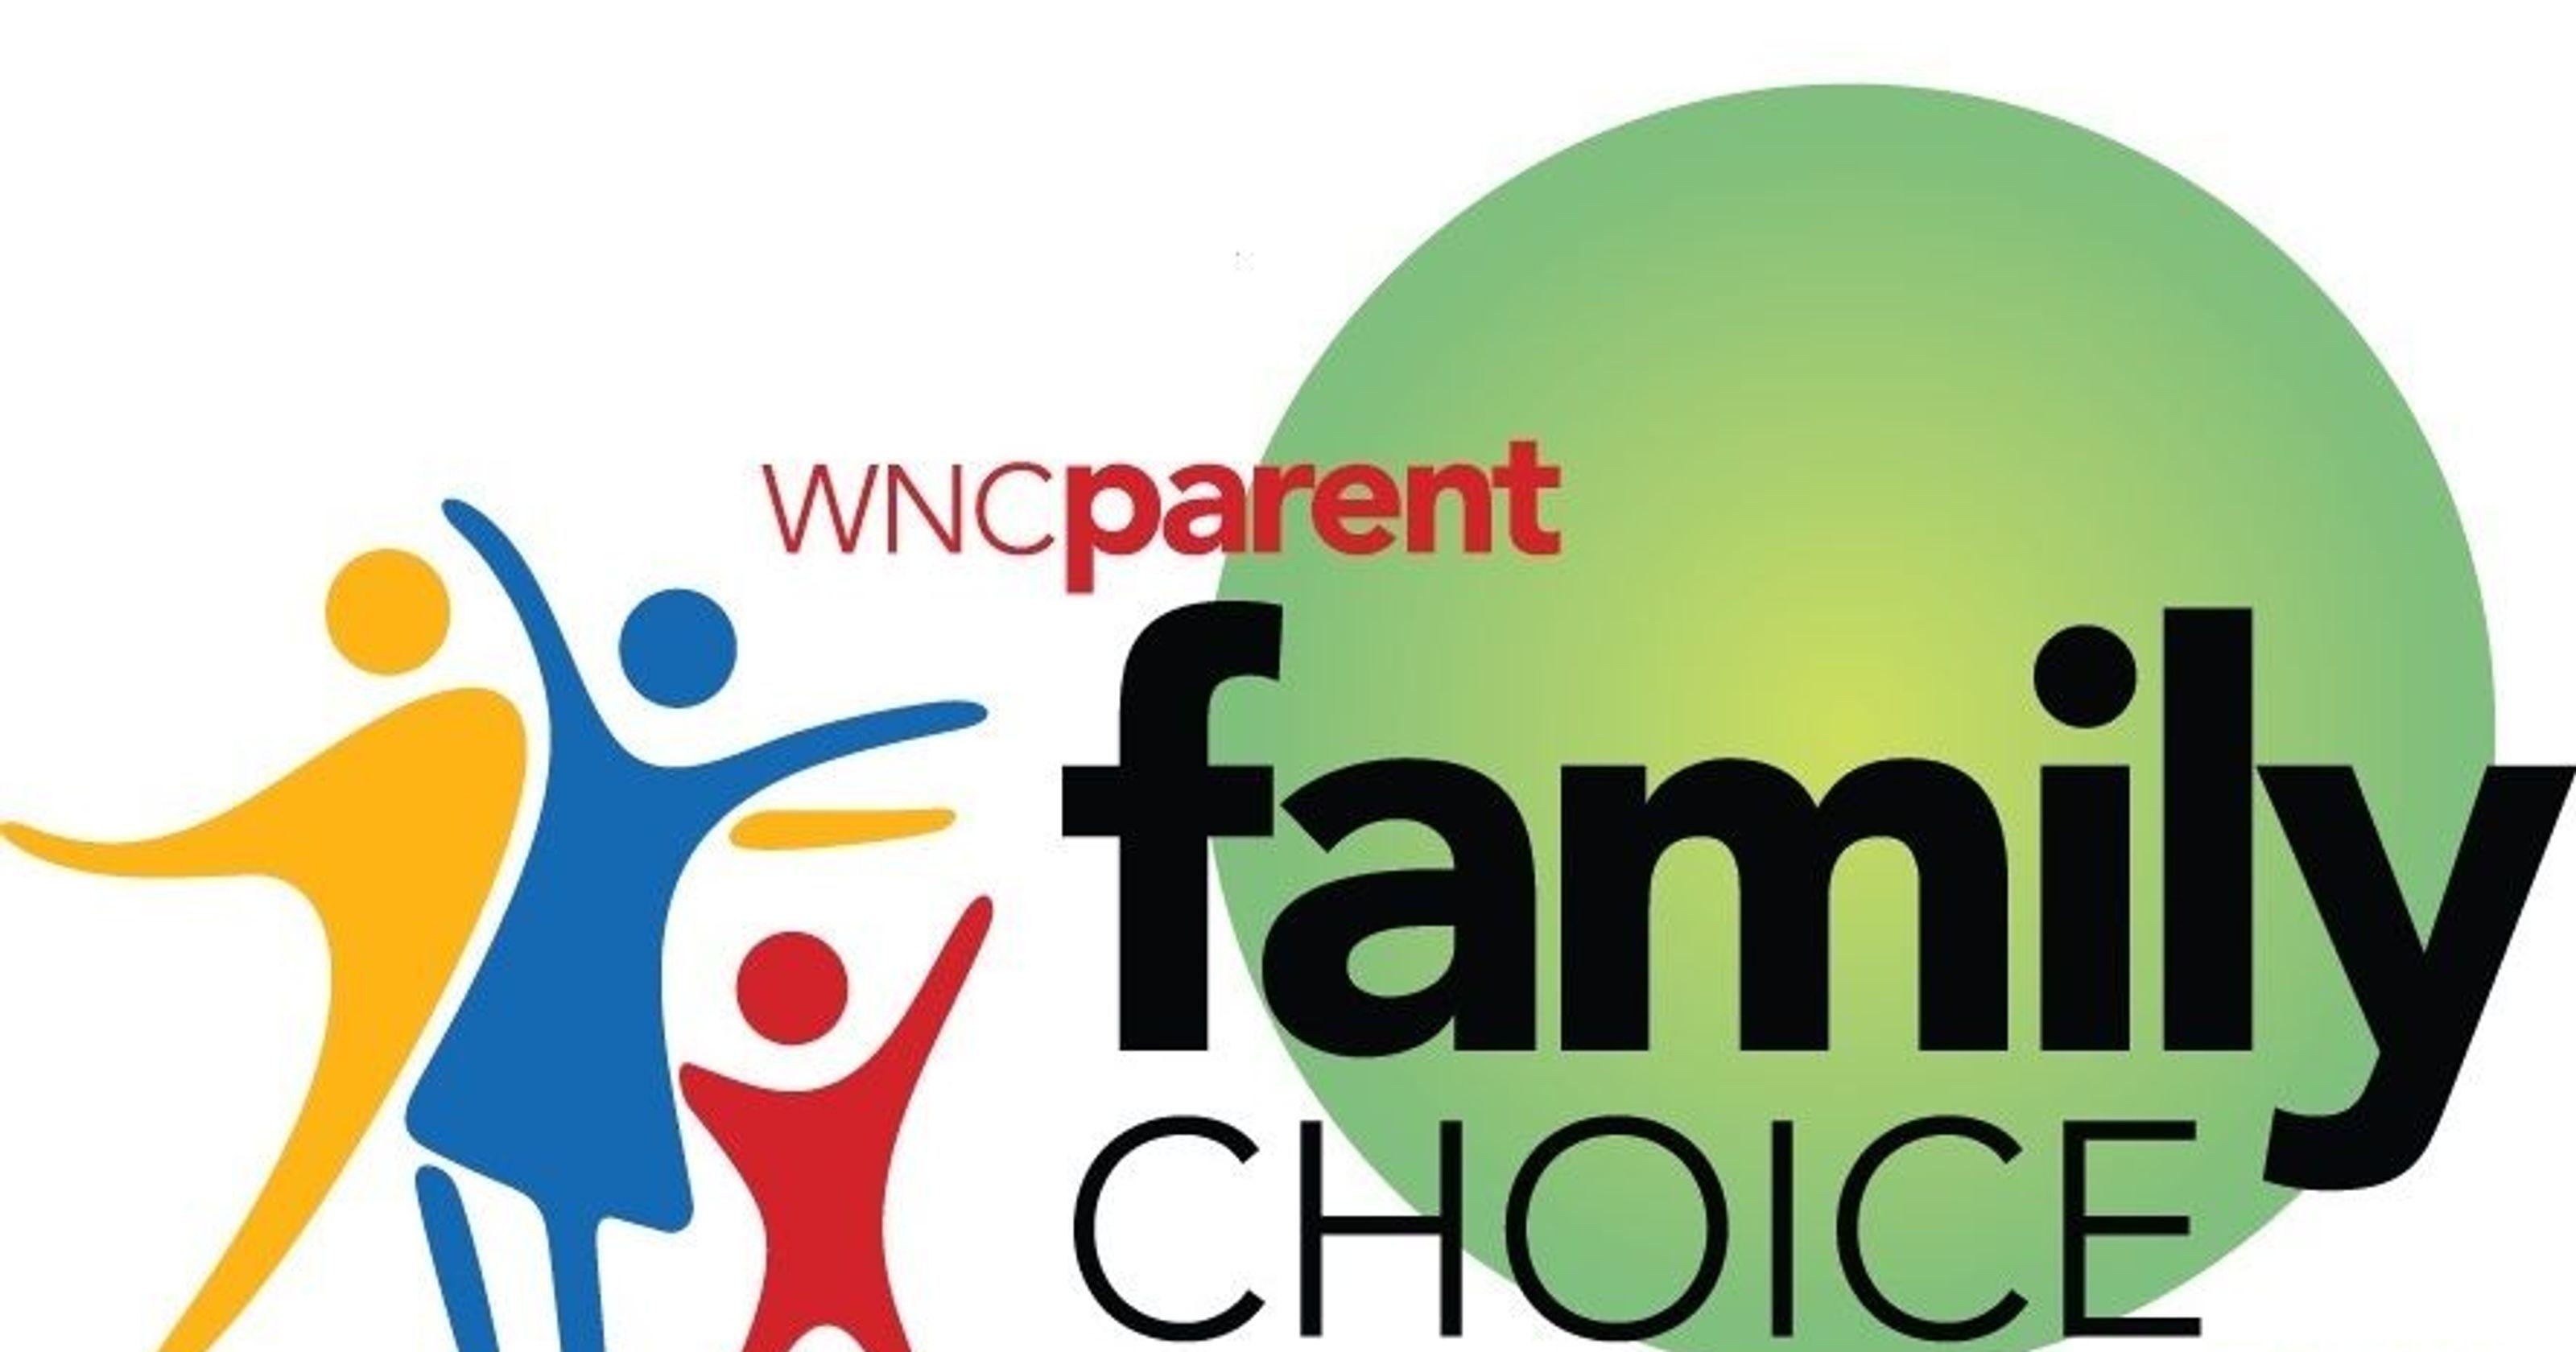 2018 FCA Logo - Who won WNC Parent's 2018 Family Choice Awards?